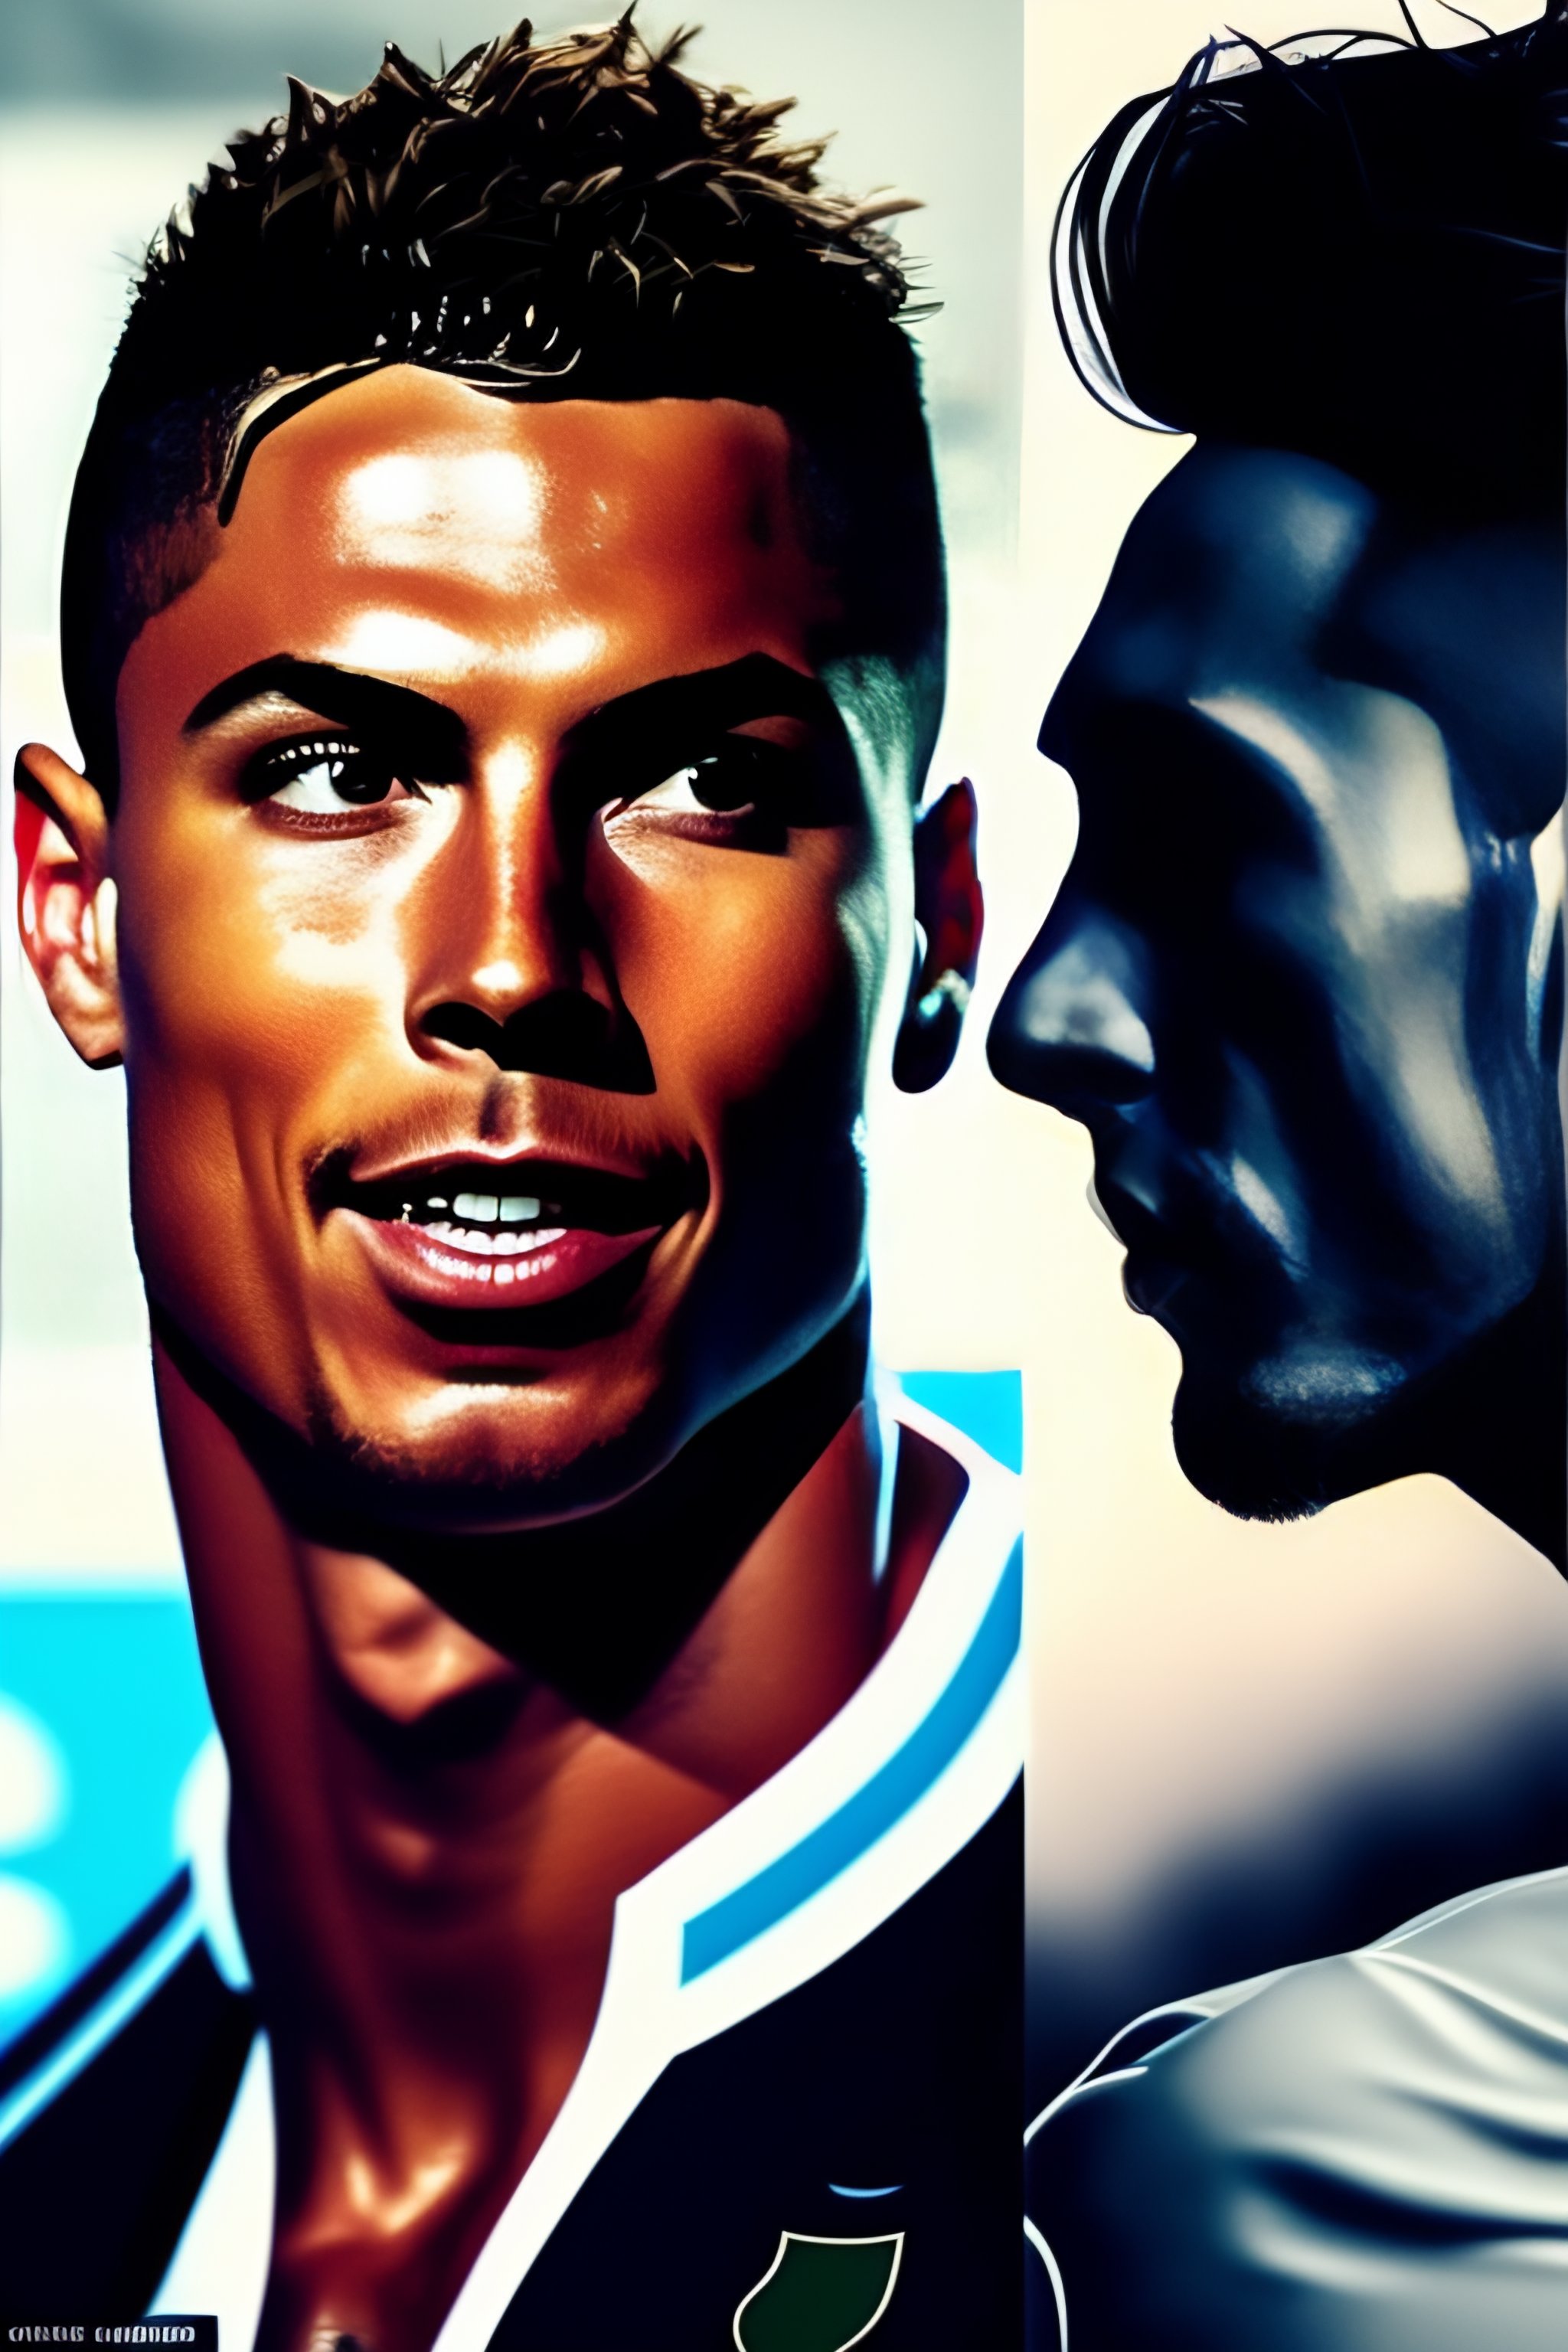 Lexica - Ronaldo who eat messi